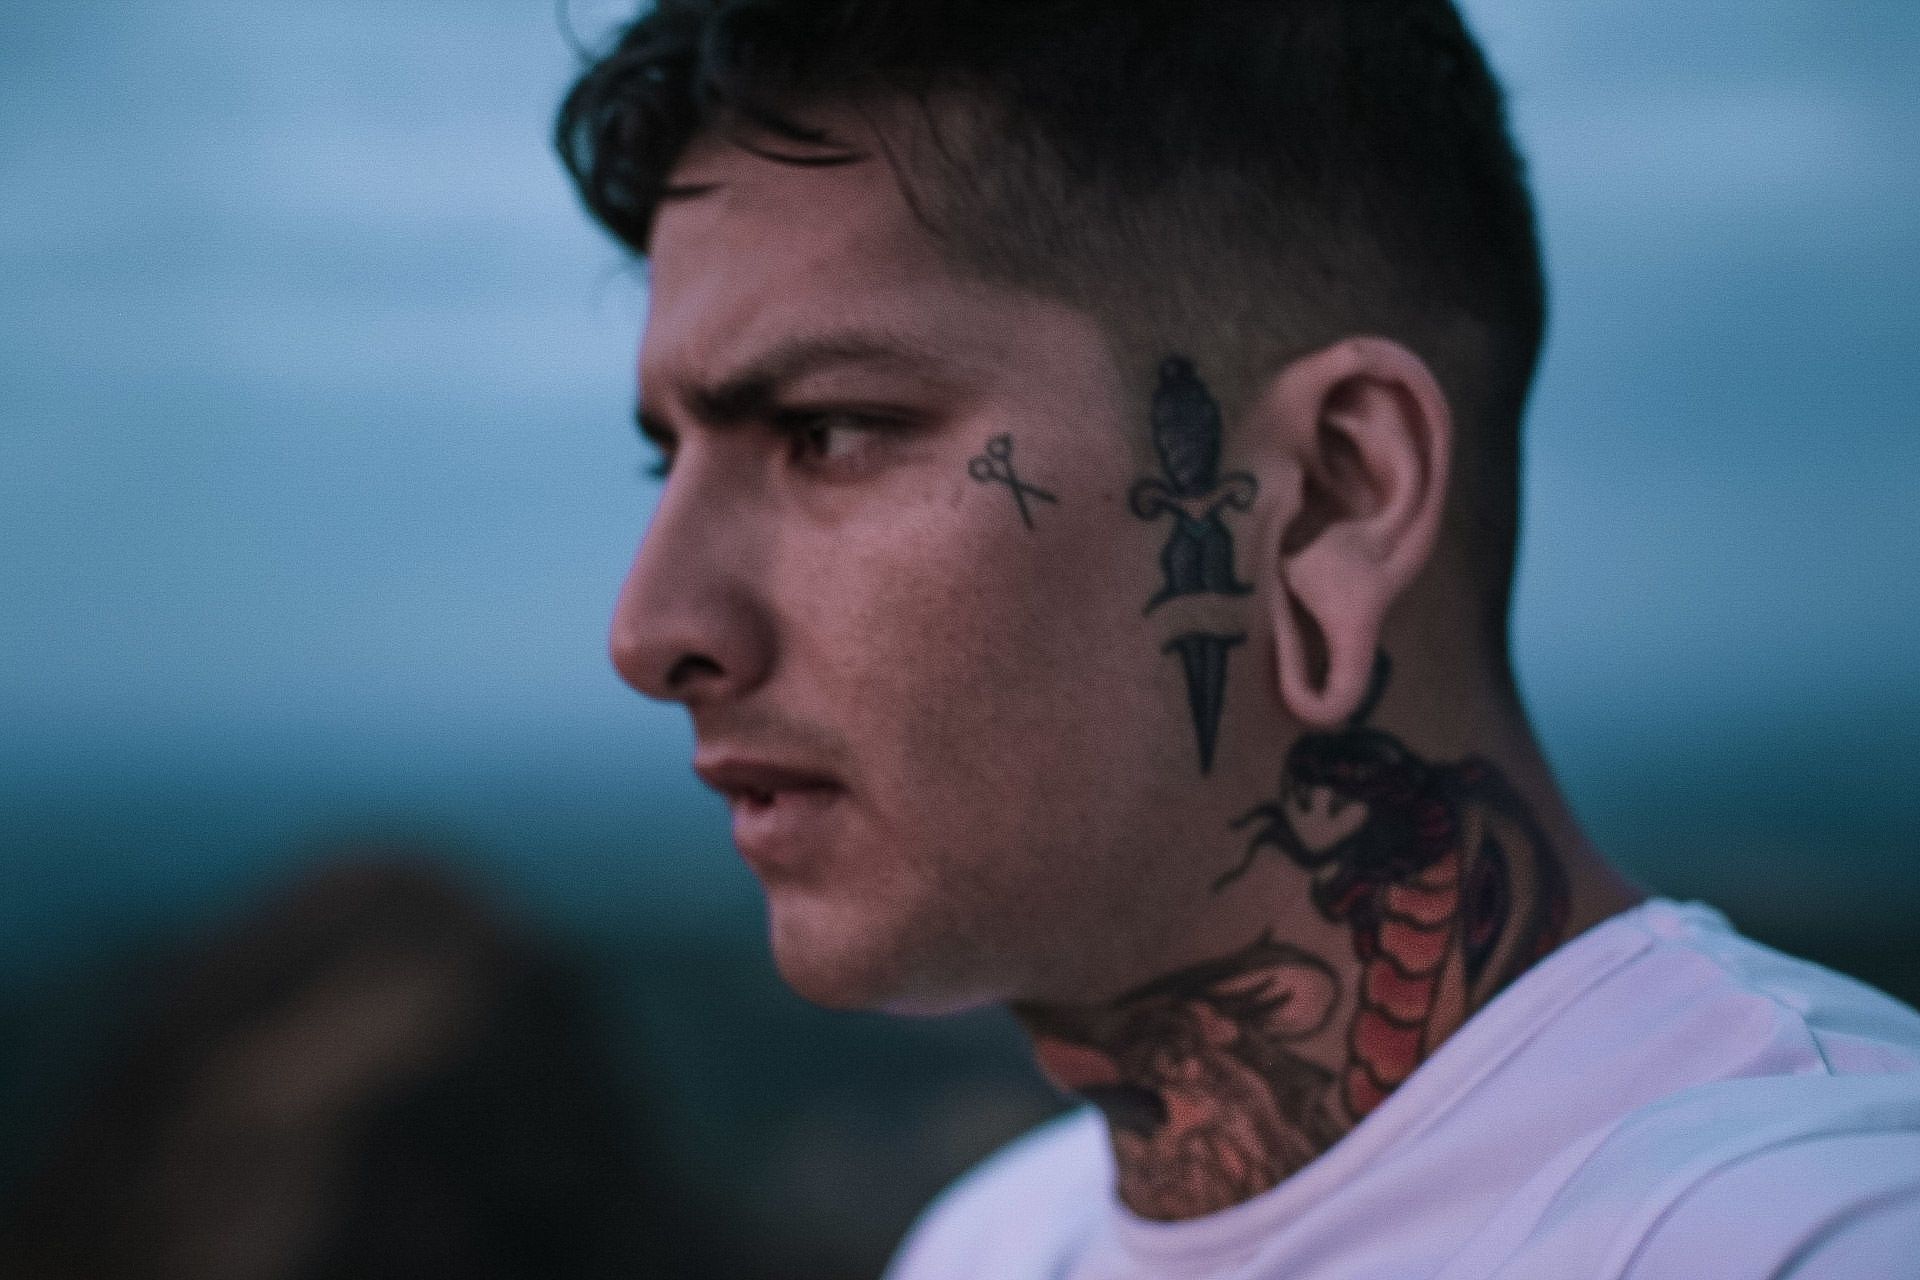 18 Coolest Neck Tattoos For Men - Psycho Tats